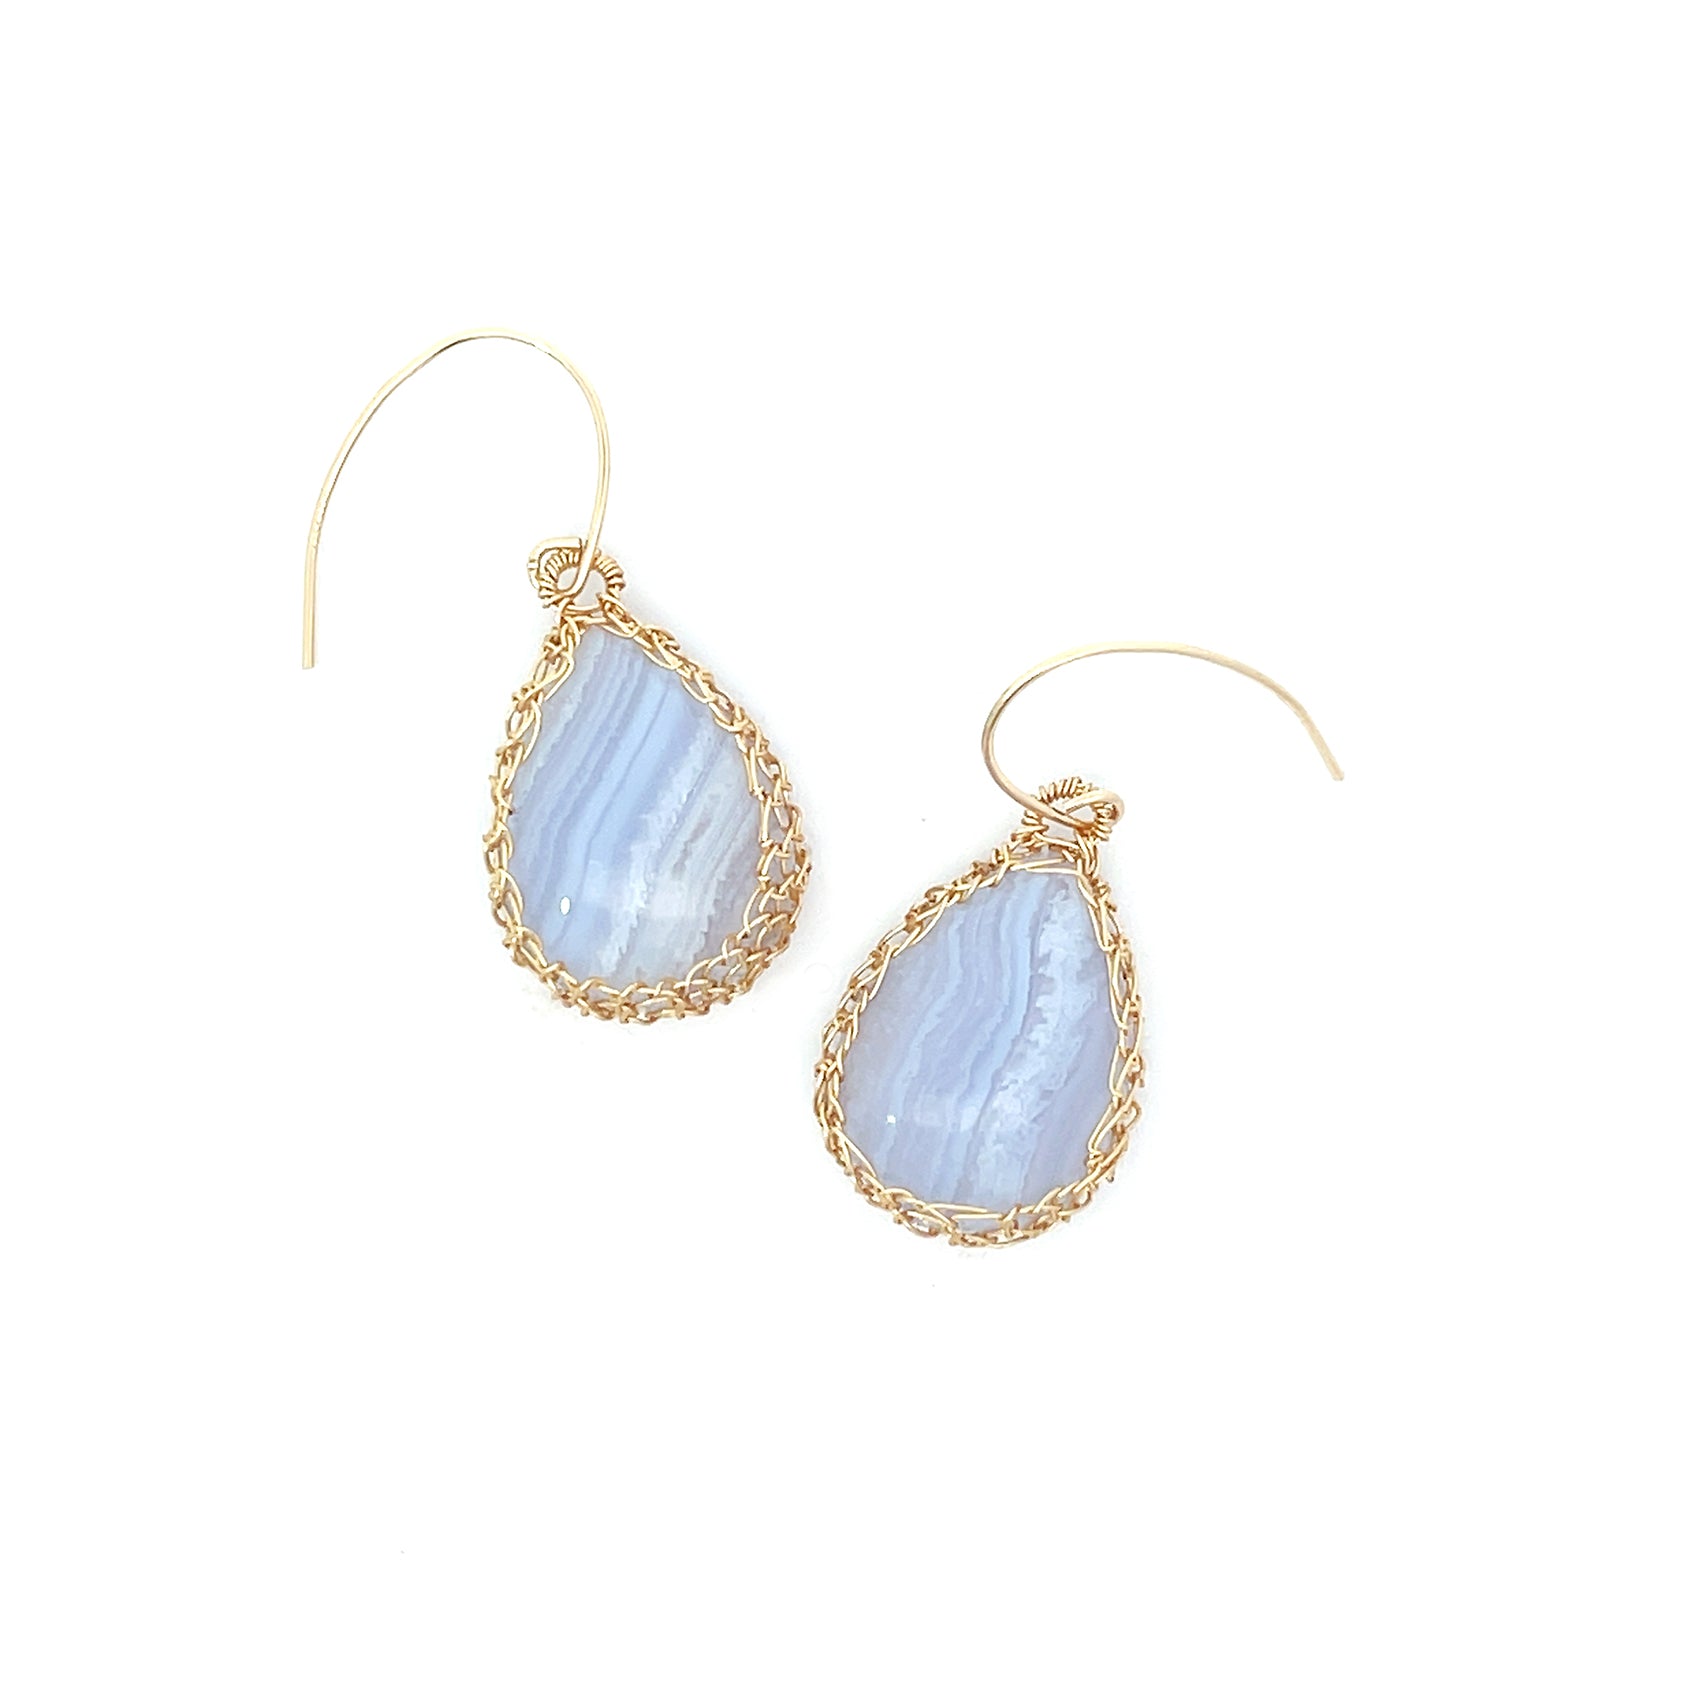 Shop Authentic NATI Blue Lace Agate Tear Drop Earrings